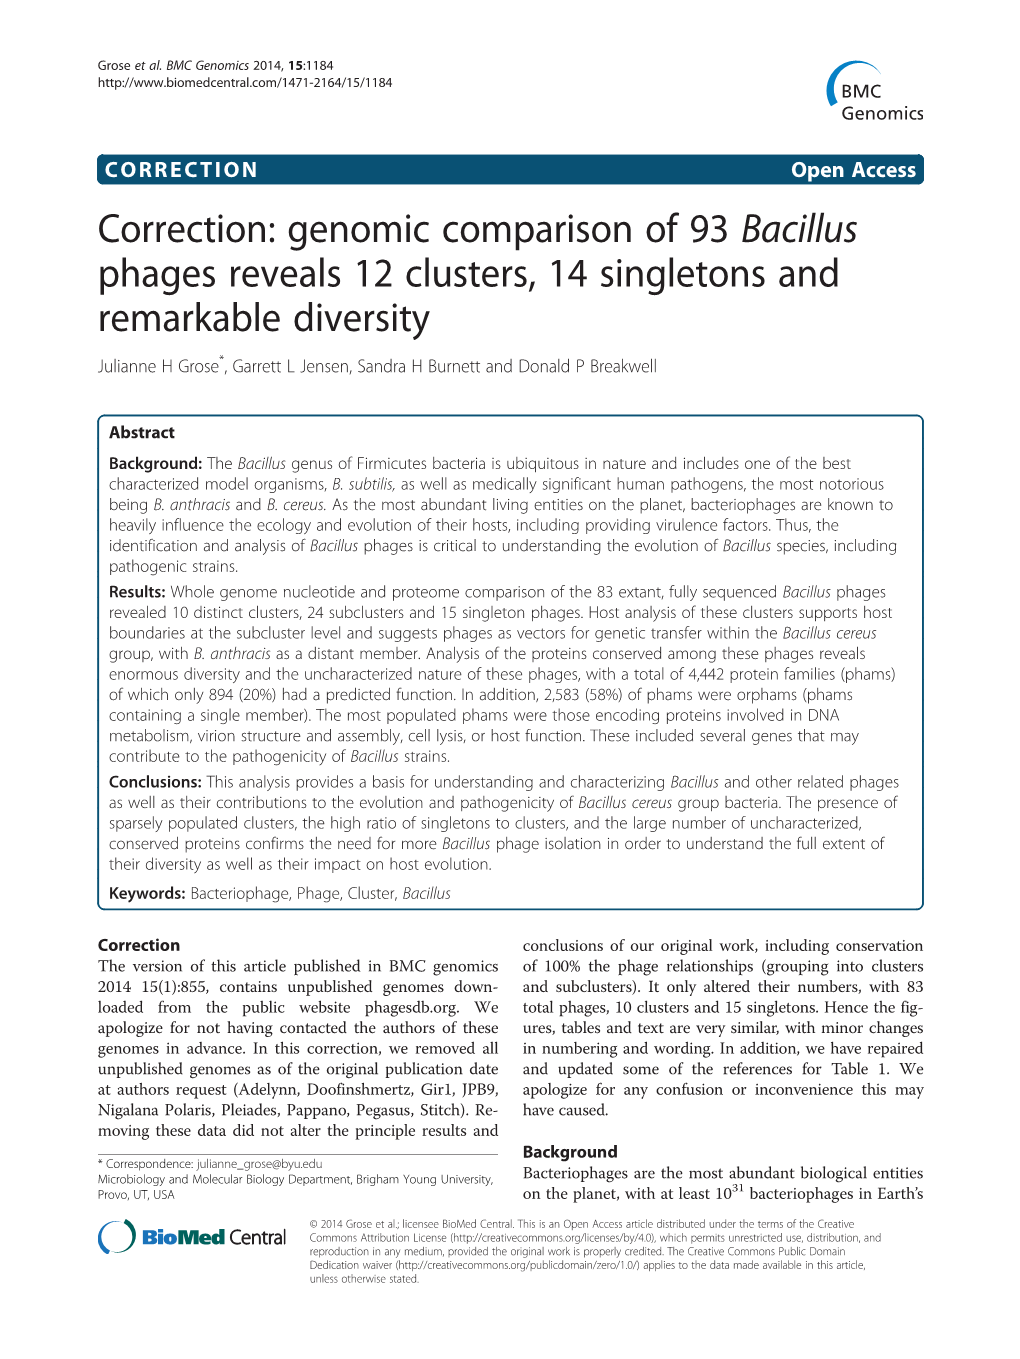 Correction: Genomic Comparison of 93 Bacillus Phages Reveals 12 Clusters